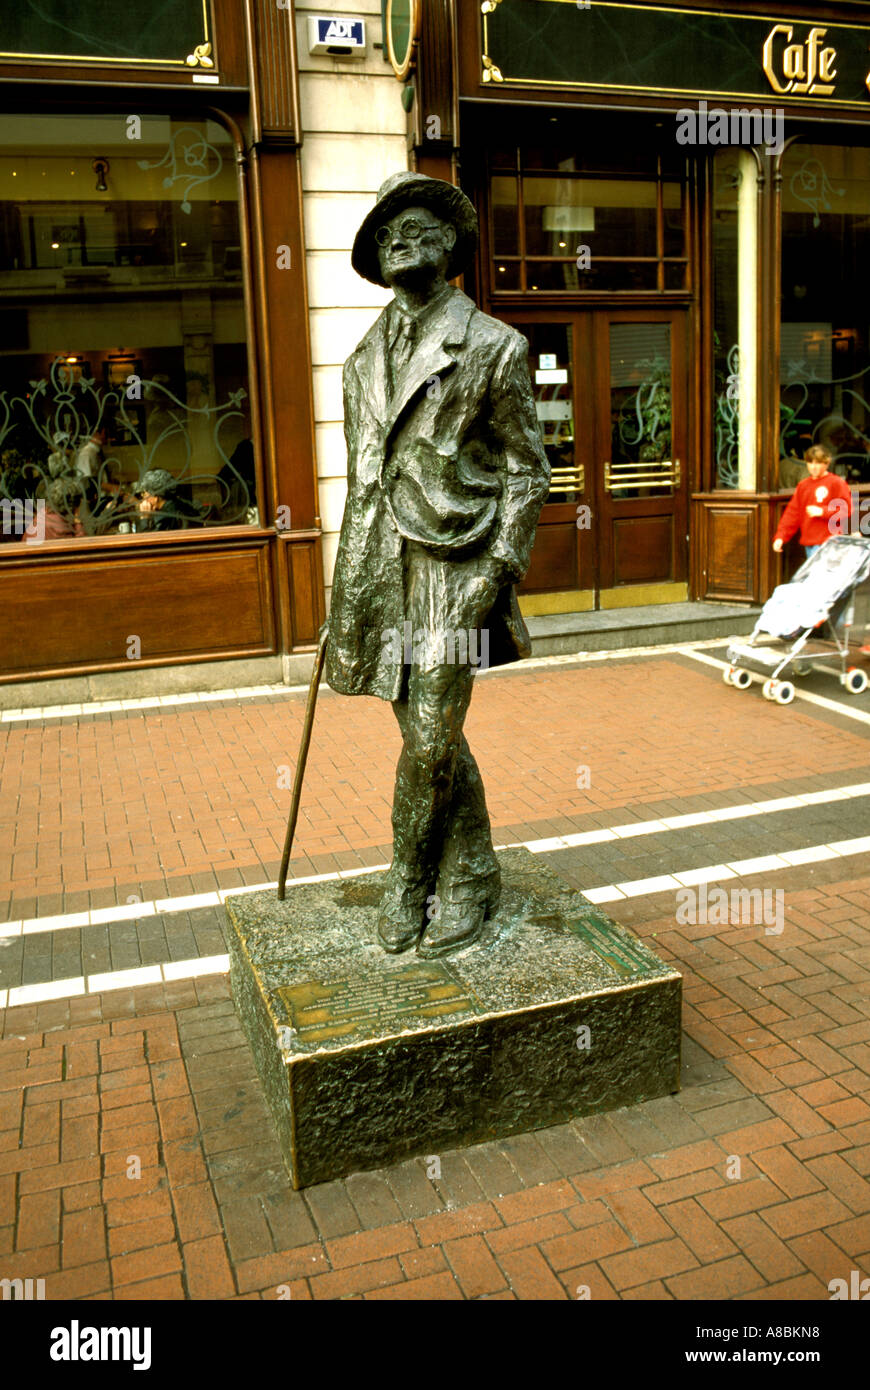 Posterazzi Co Dublin Ireland Sculpture Of James Joyce With